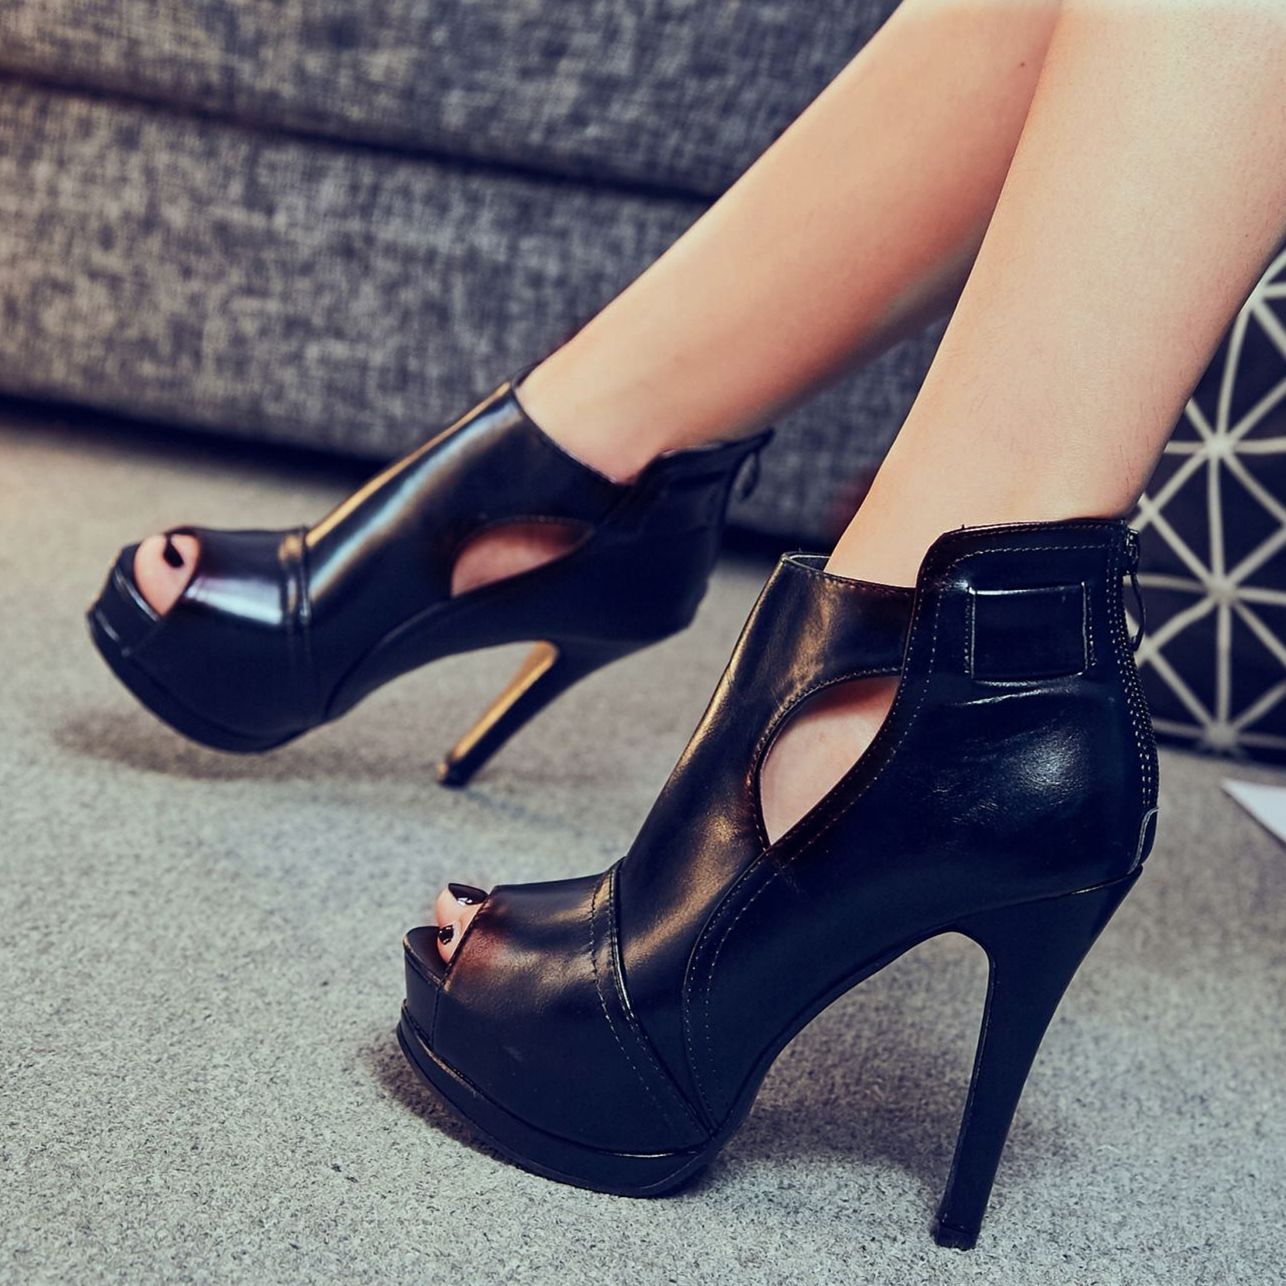 high heels with open toe